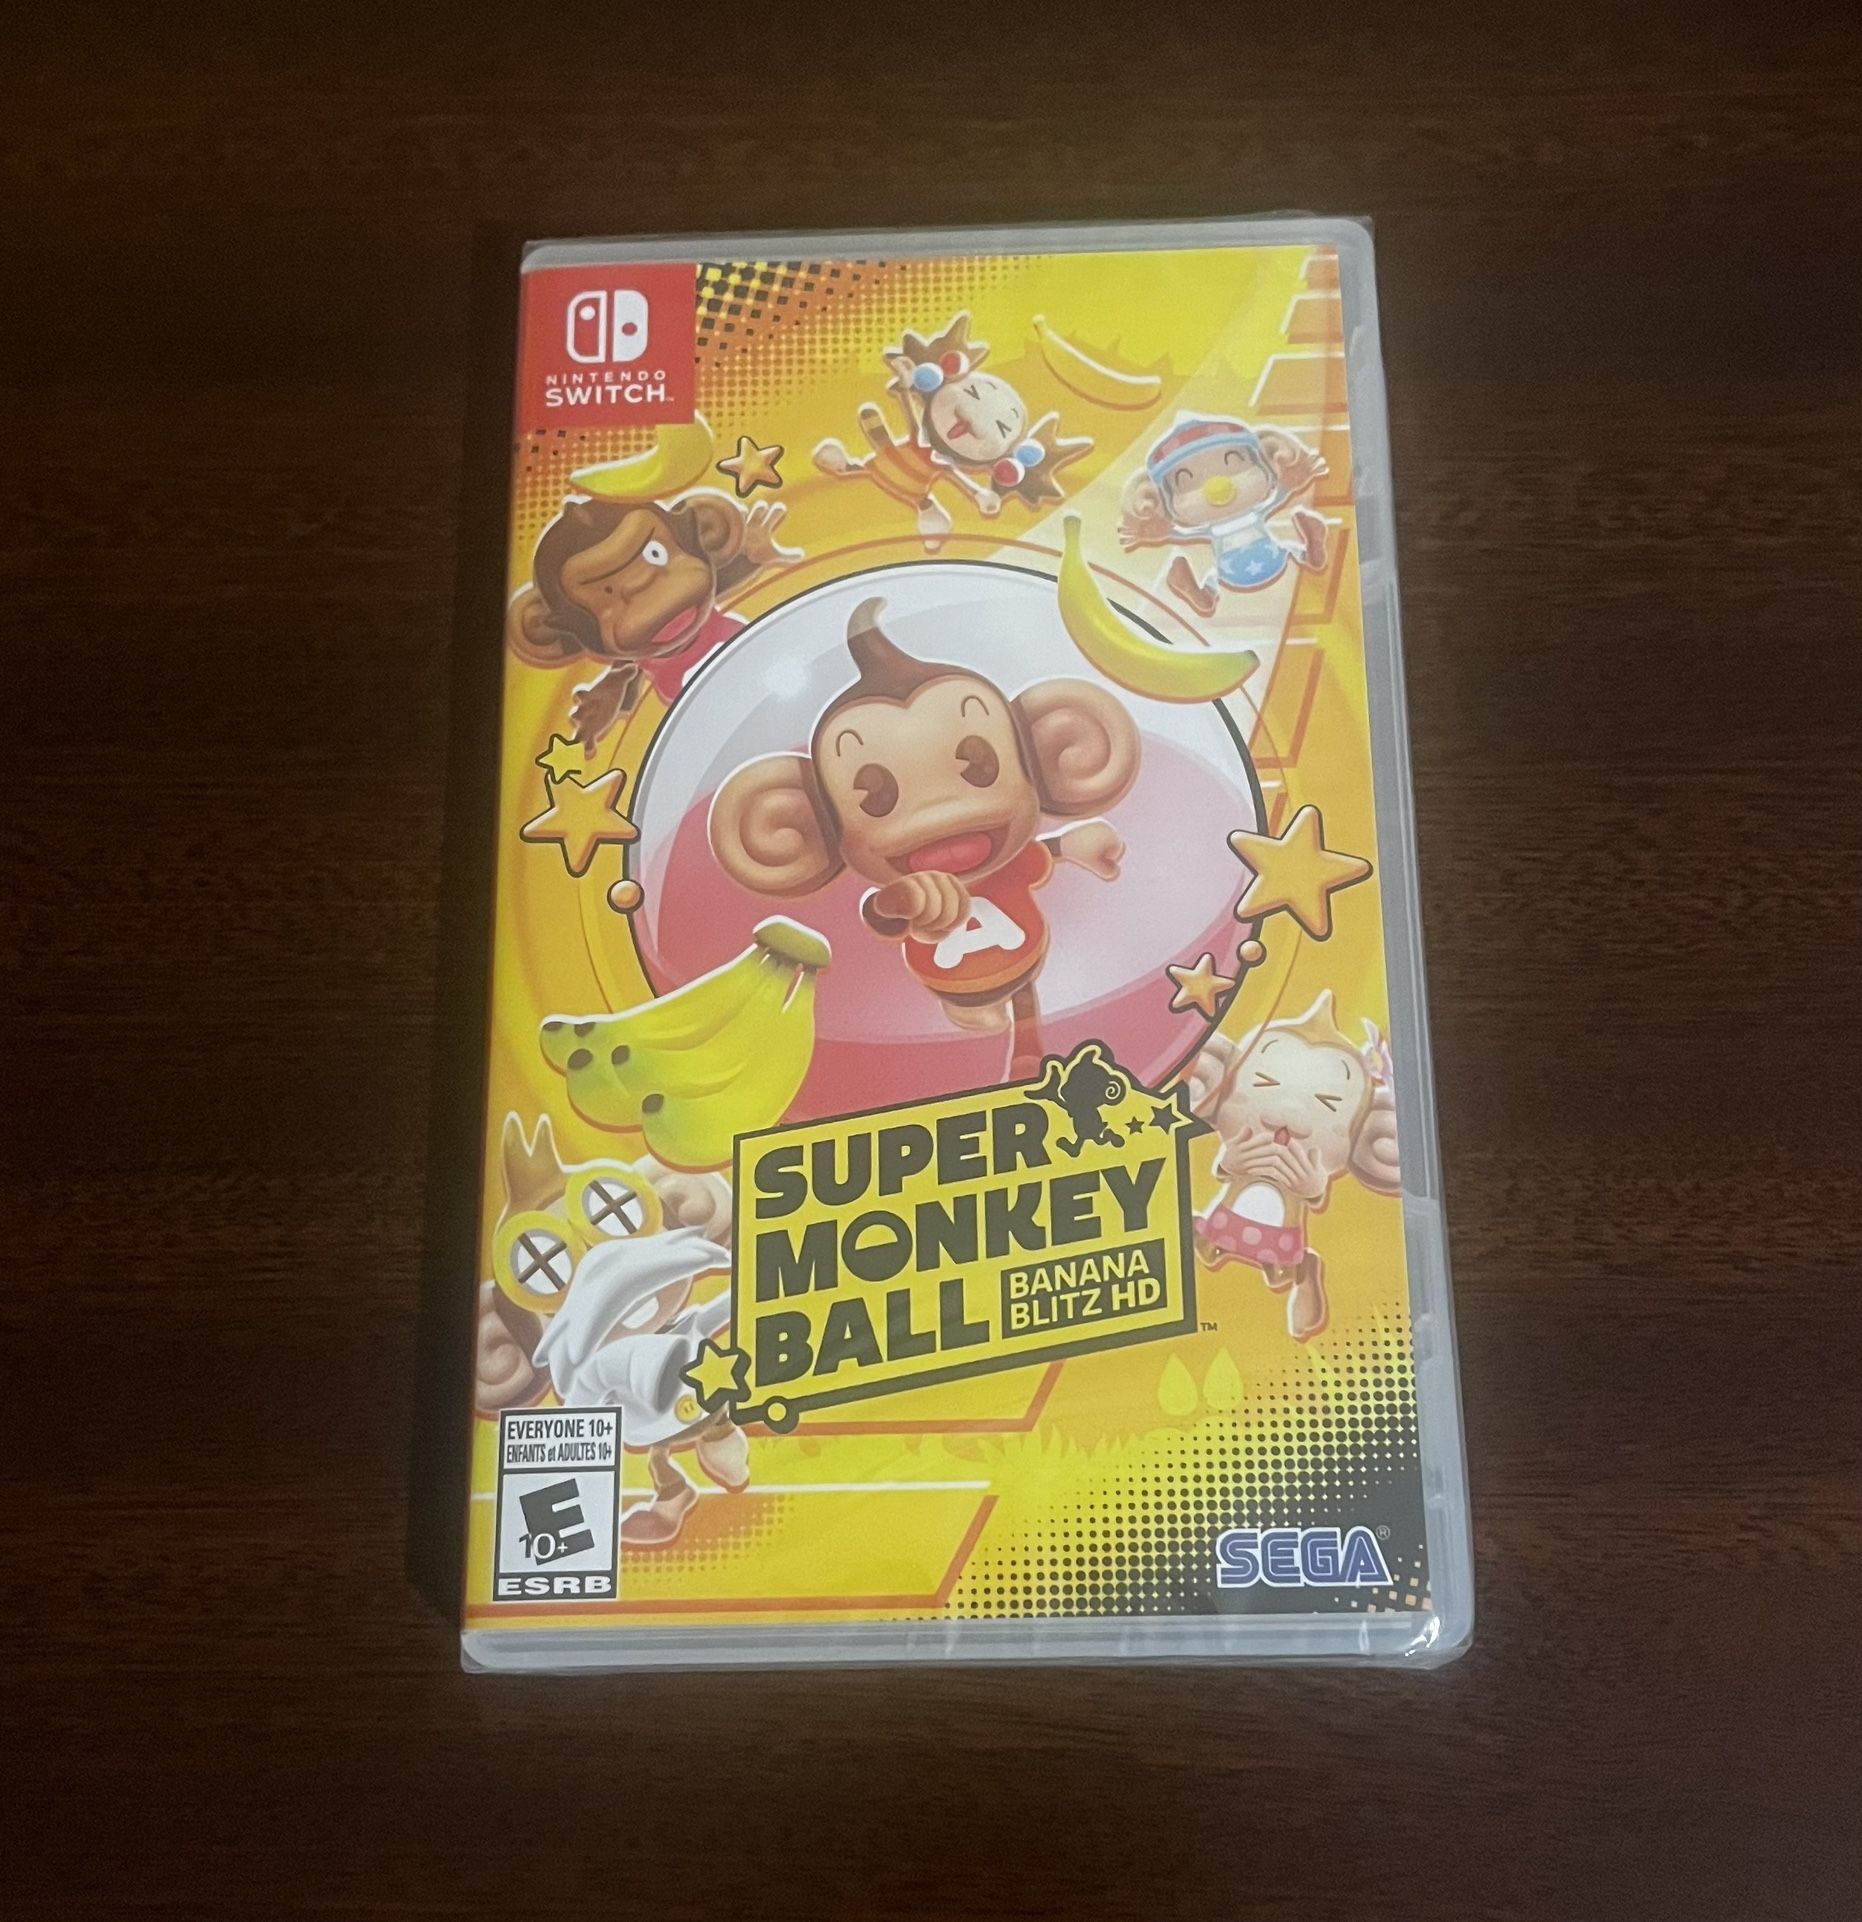 Super Monkey Ball Banana Blitz HD for Nintendo Switch - New Sealed